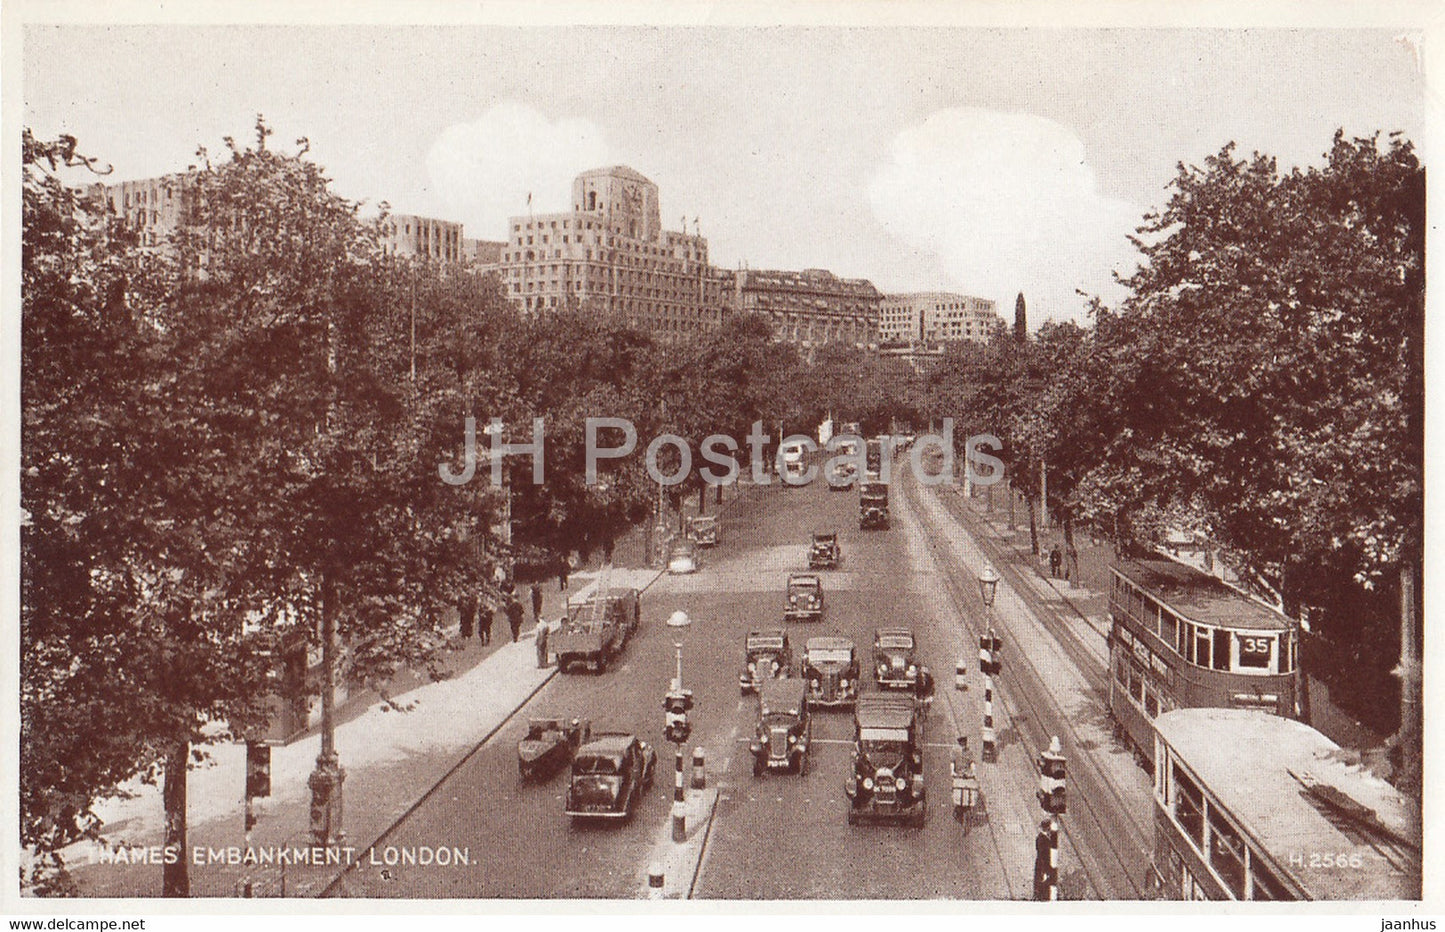 London - Thames Embankment - tram - car - Valentine - 2566 - old postcard - England - United Kingdom - unused - JH Postcards